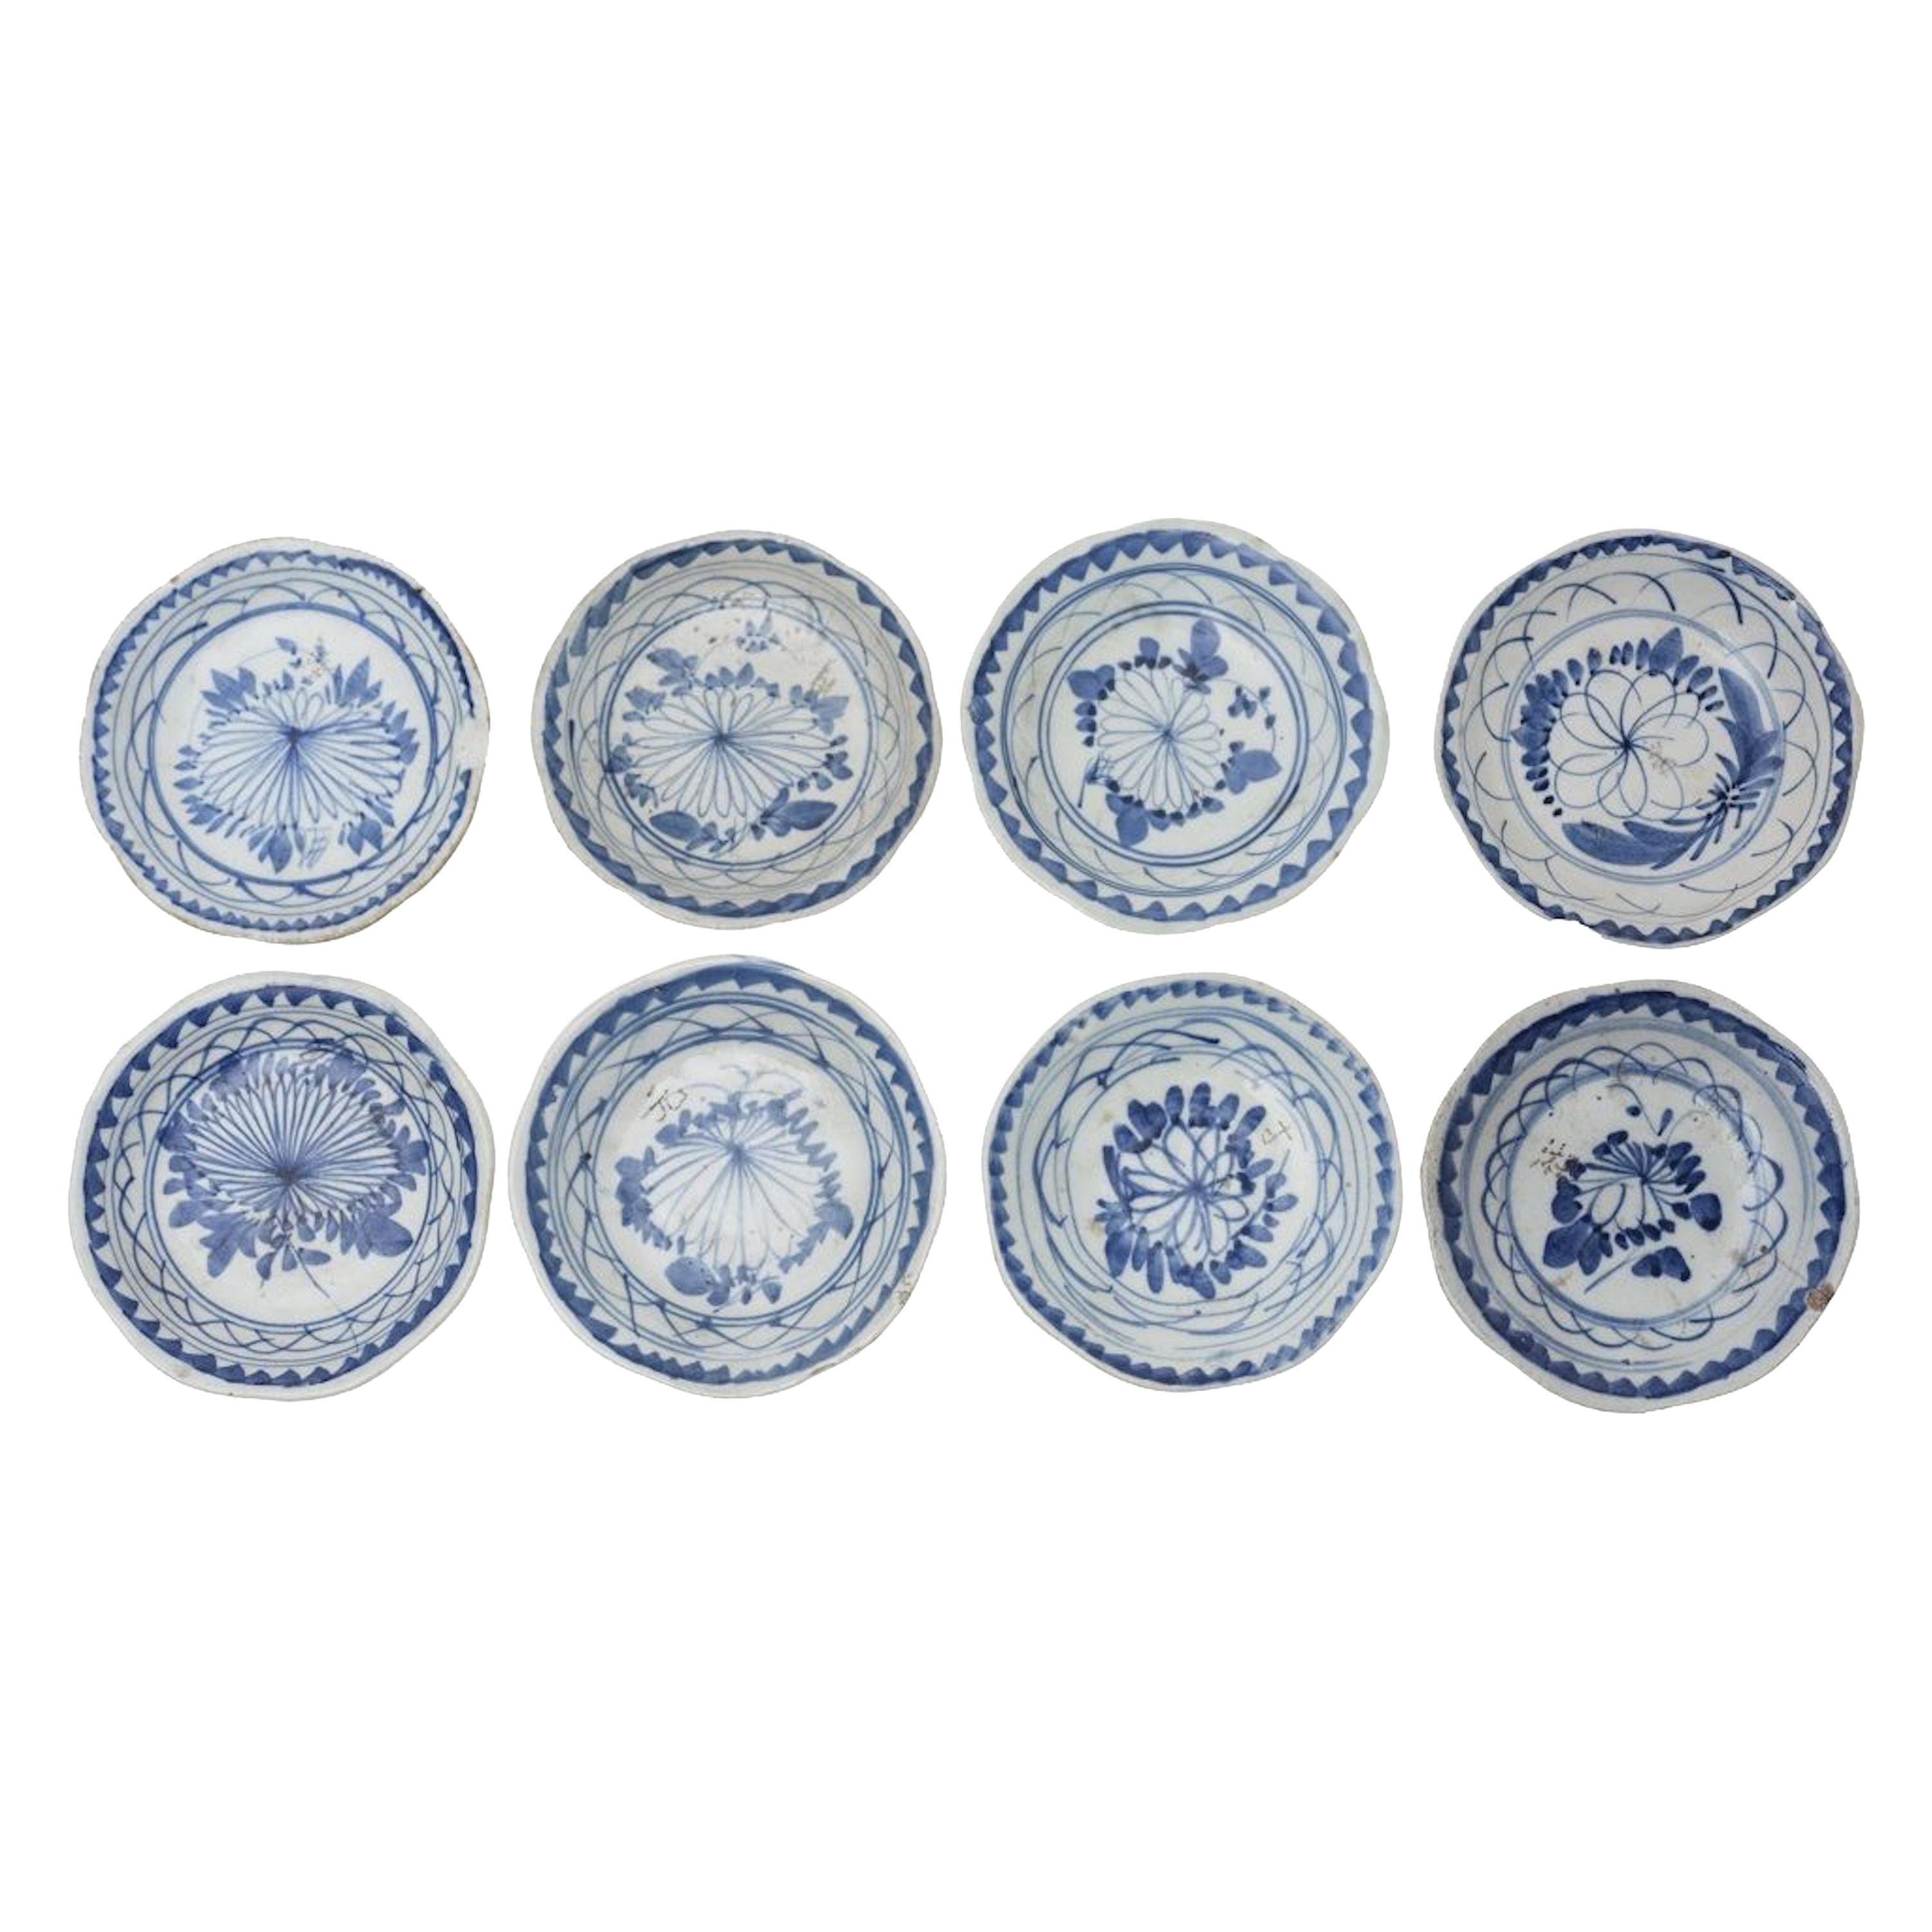 Set of 8 Ancient Chinese Bowls, China, 17th-19th Century